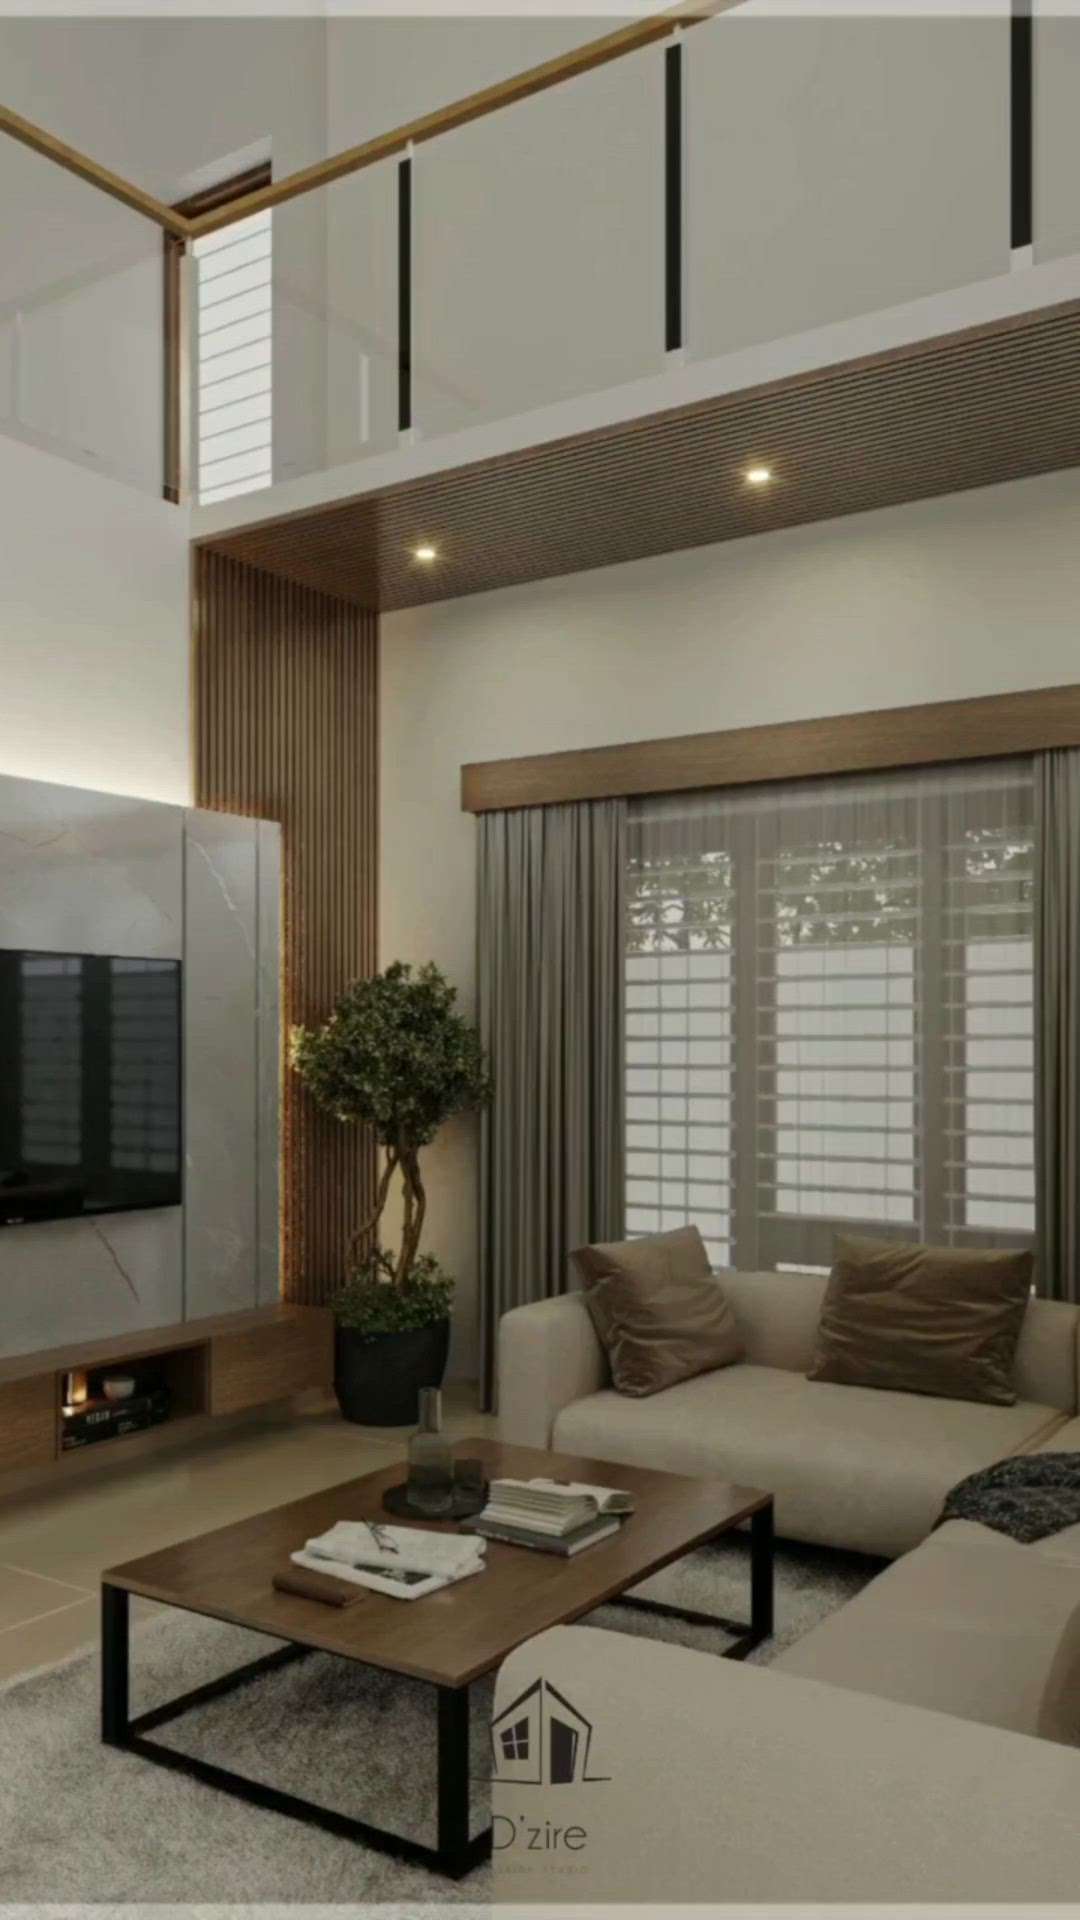 INTERIOR STORIES
.
.
Client details : Sudhi K V
.
.
Location: Pookatupady, Ernakulam
.
.
Designed by : @dzire_design_studio 
 #LivingroomDesigns #KeralaStyleHouse #keralaplanners #DiningChairs #BedroomDecor #MasterBedroom #keralaarchitectures #myhomesweetvintagehome #4DoorWardrobe #tvunits #InteriorDesigner